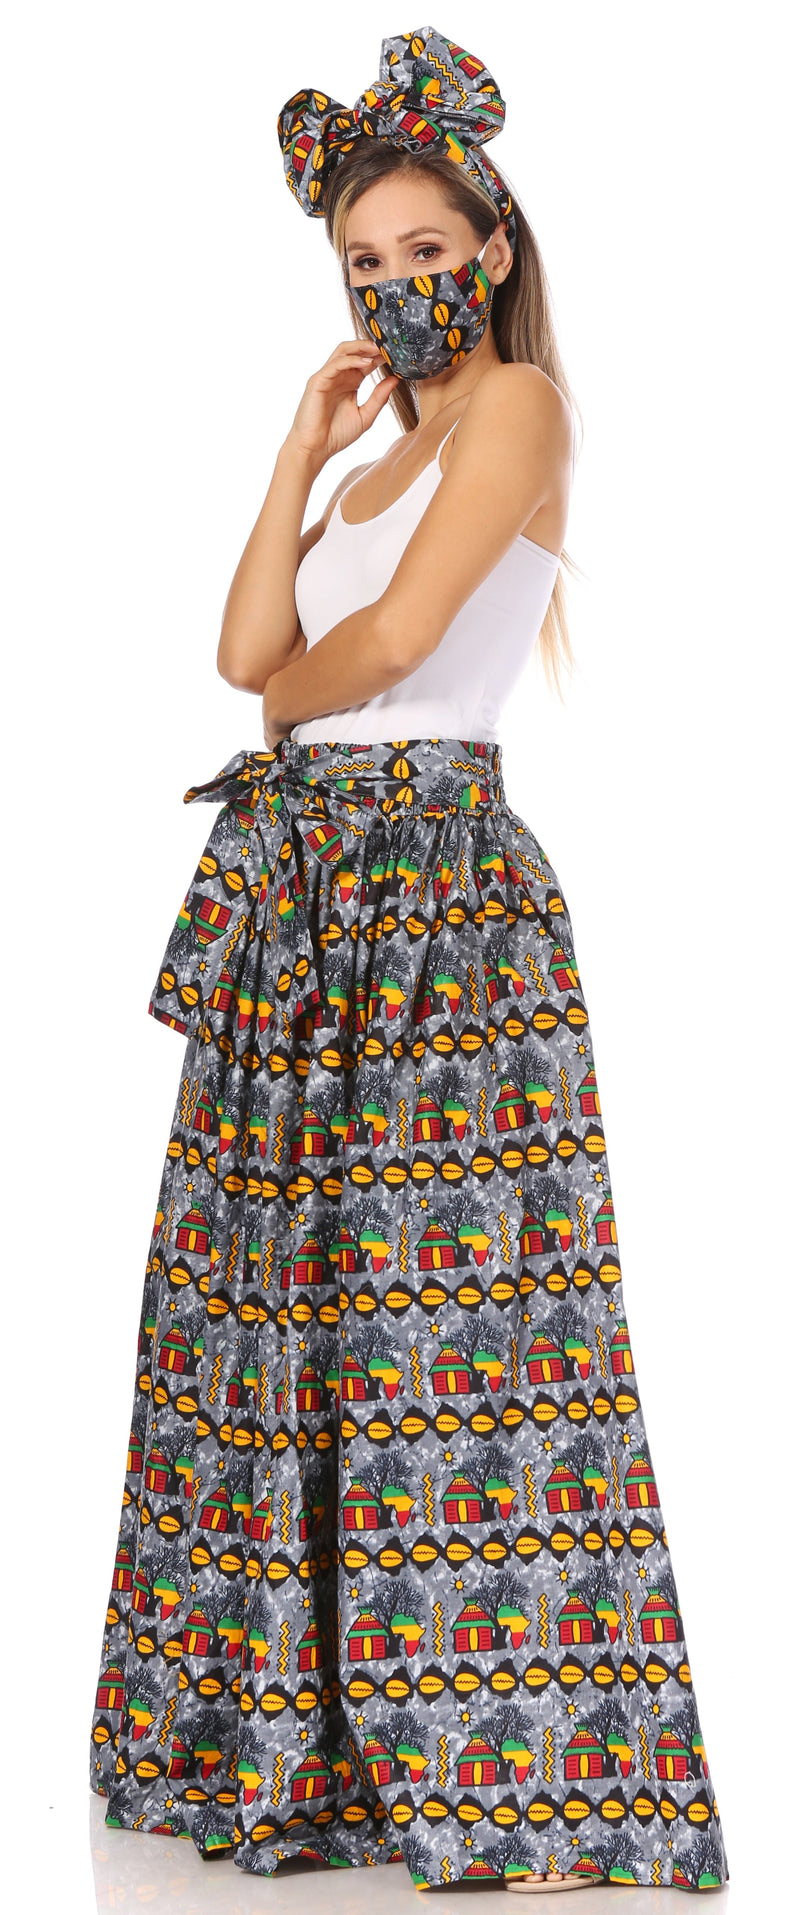 Sakkas Asma Second Convertible Traditional Wax Print Adjustable Strap Maxi Skirt